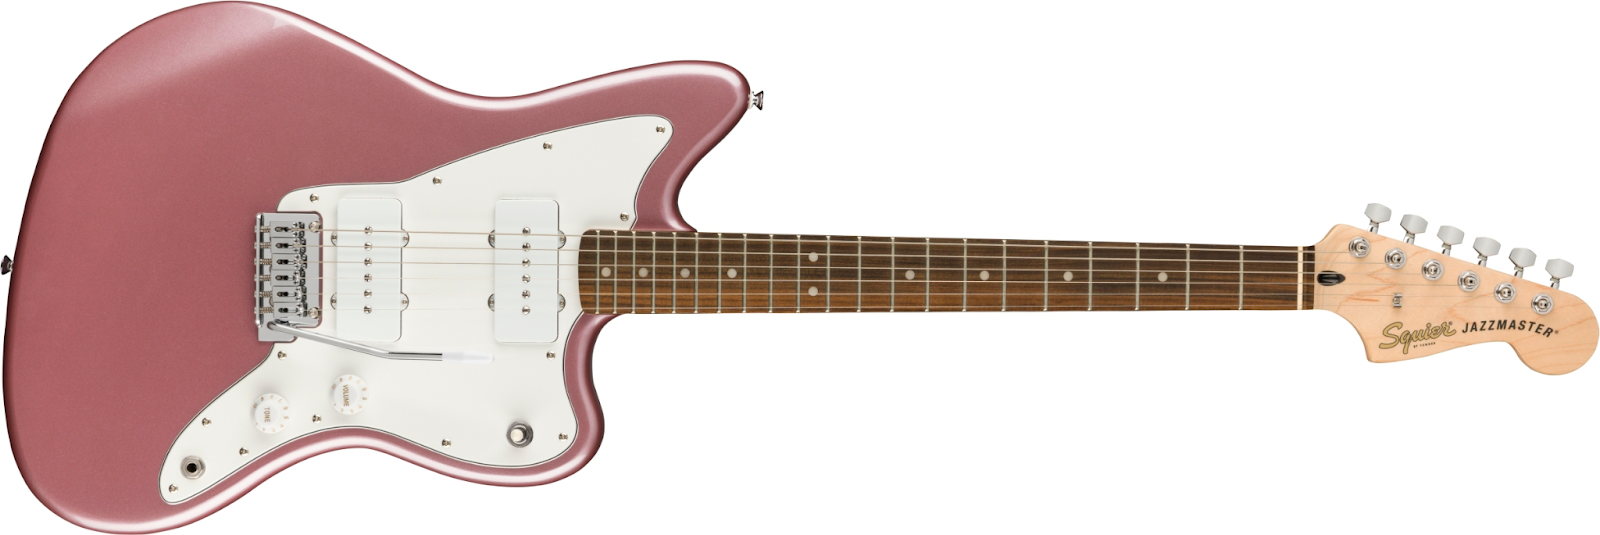 Squier Affinity Series Jazzmaster electric guitar under $300/£300.